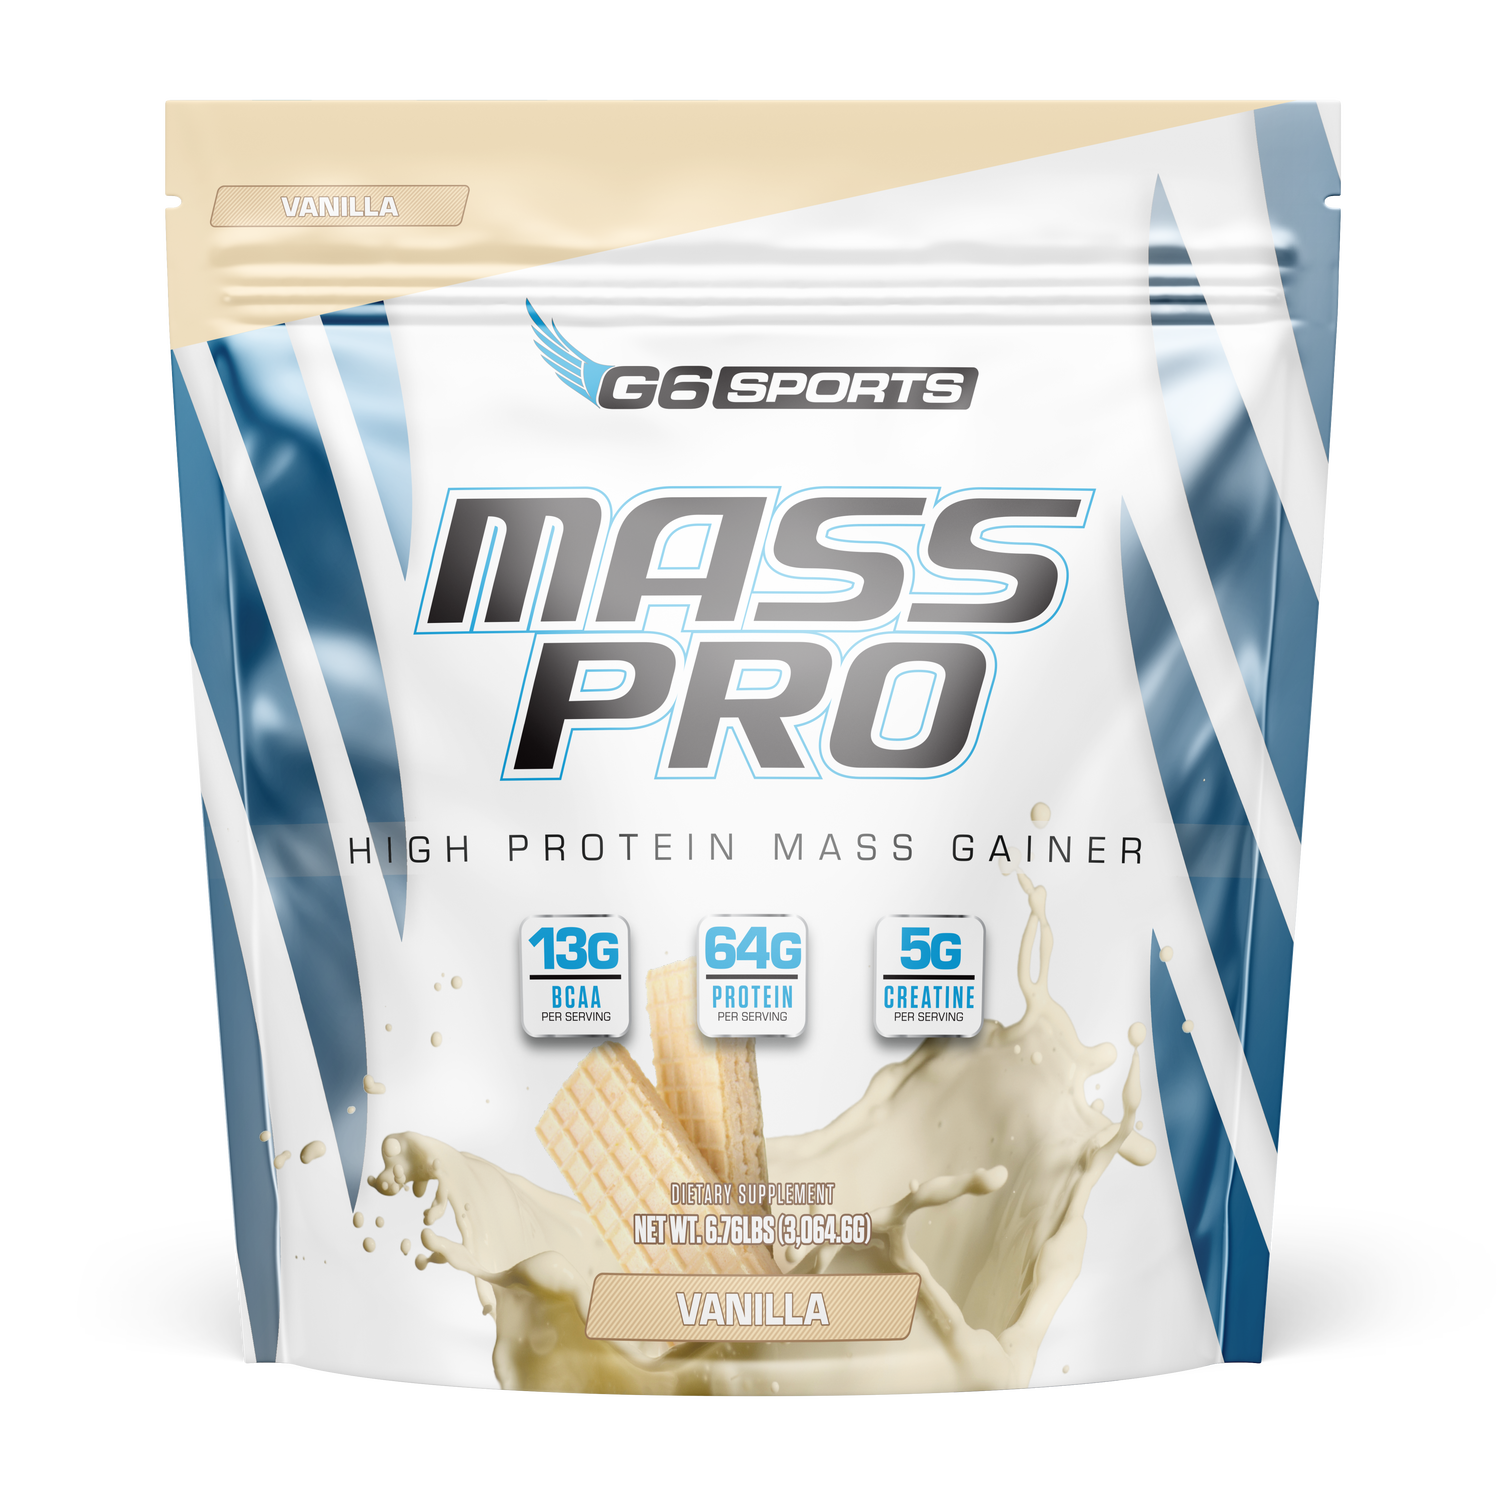 G6 Sports Mass Pro High Protein Mass Gainer- Vanilla (14 Servings) - 6.76 lbs.